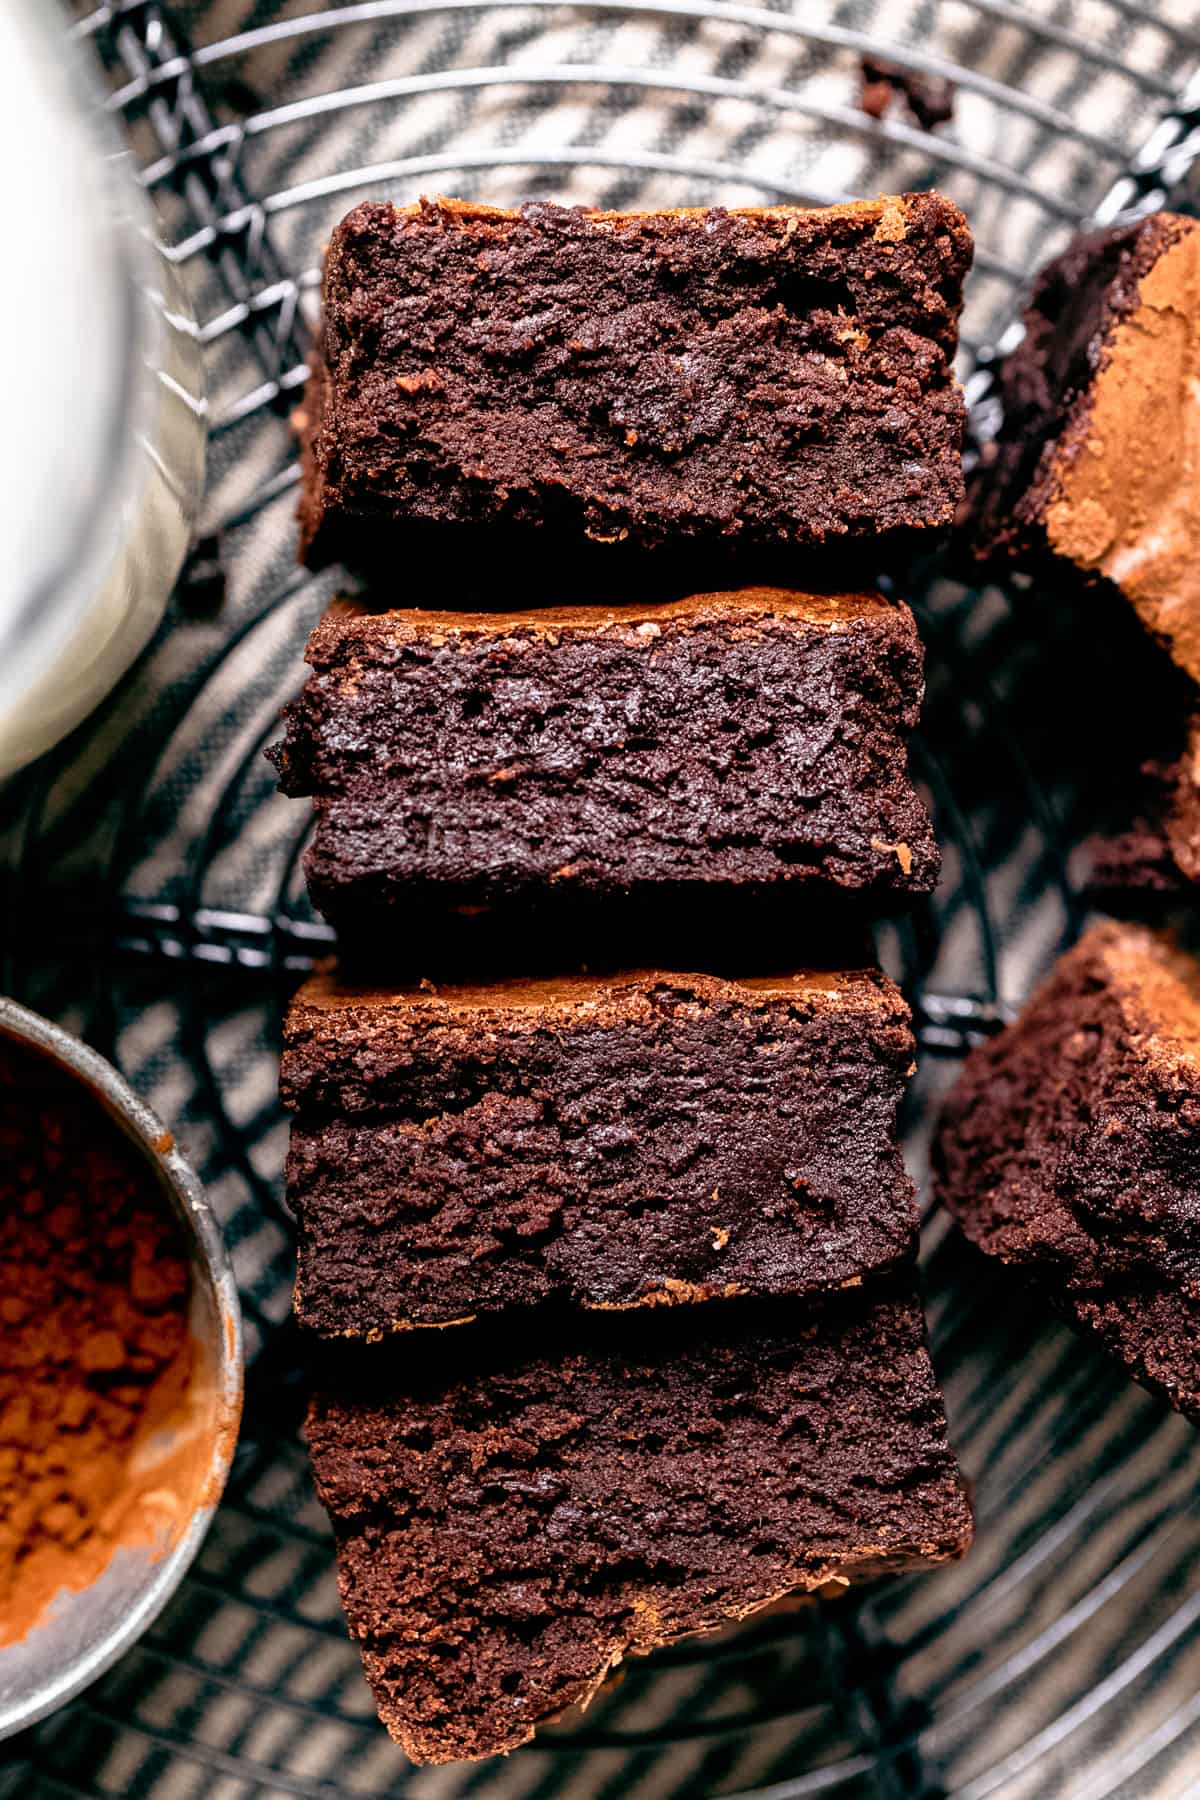 Perfect chocolate brownies recipe - BBC Food